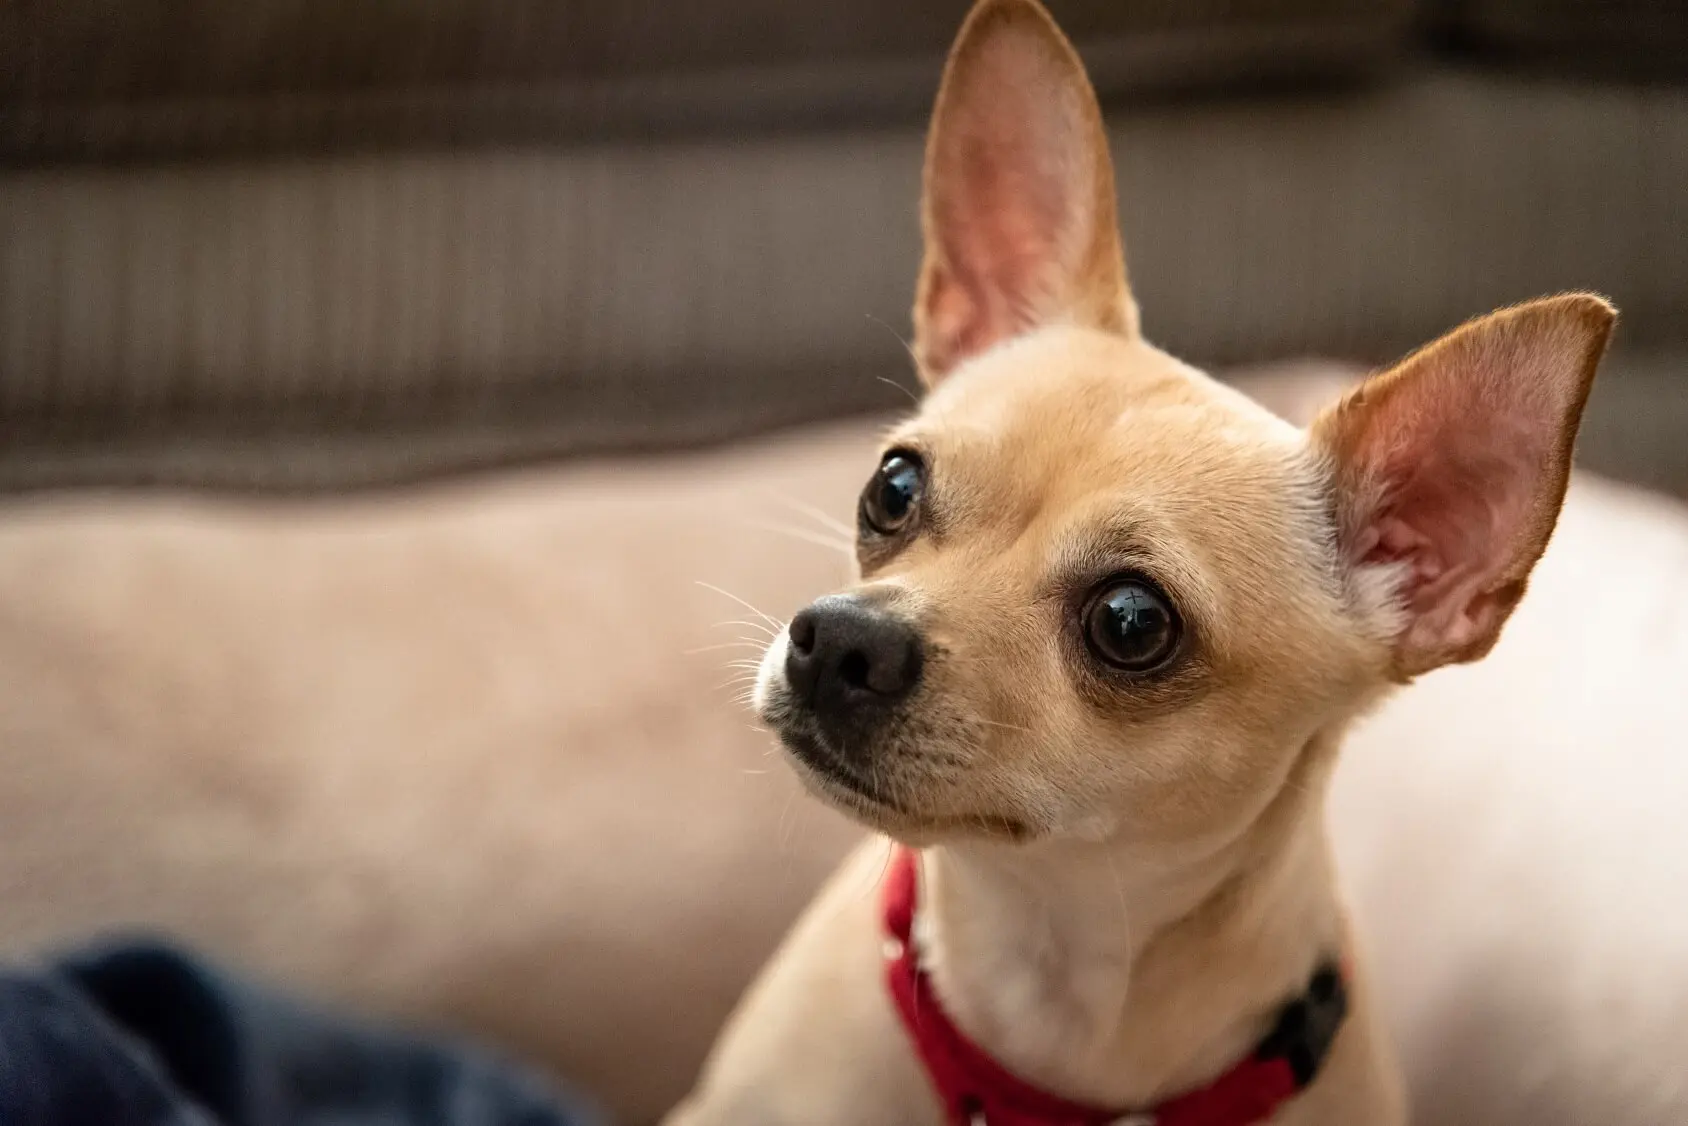 II. Physical Characteristics of Apple-Head Chihuahuas